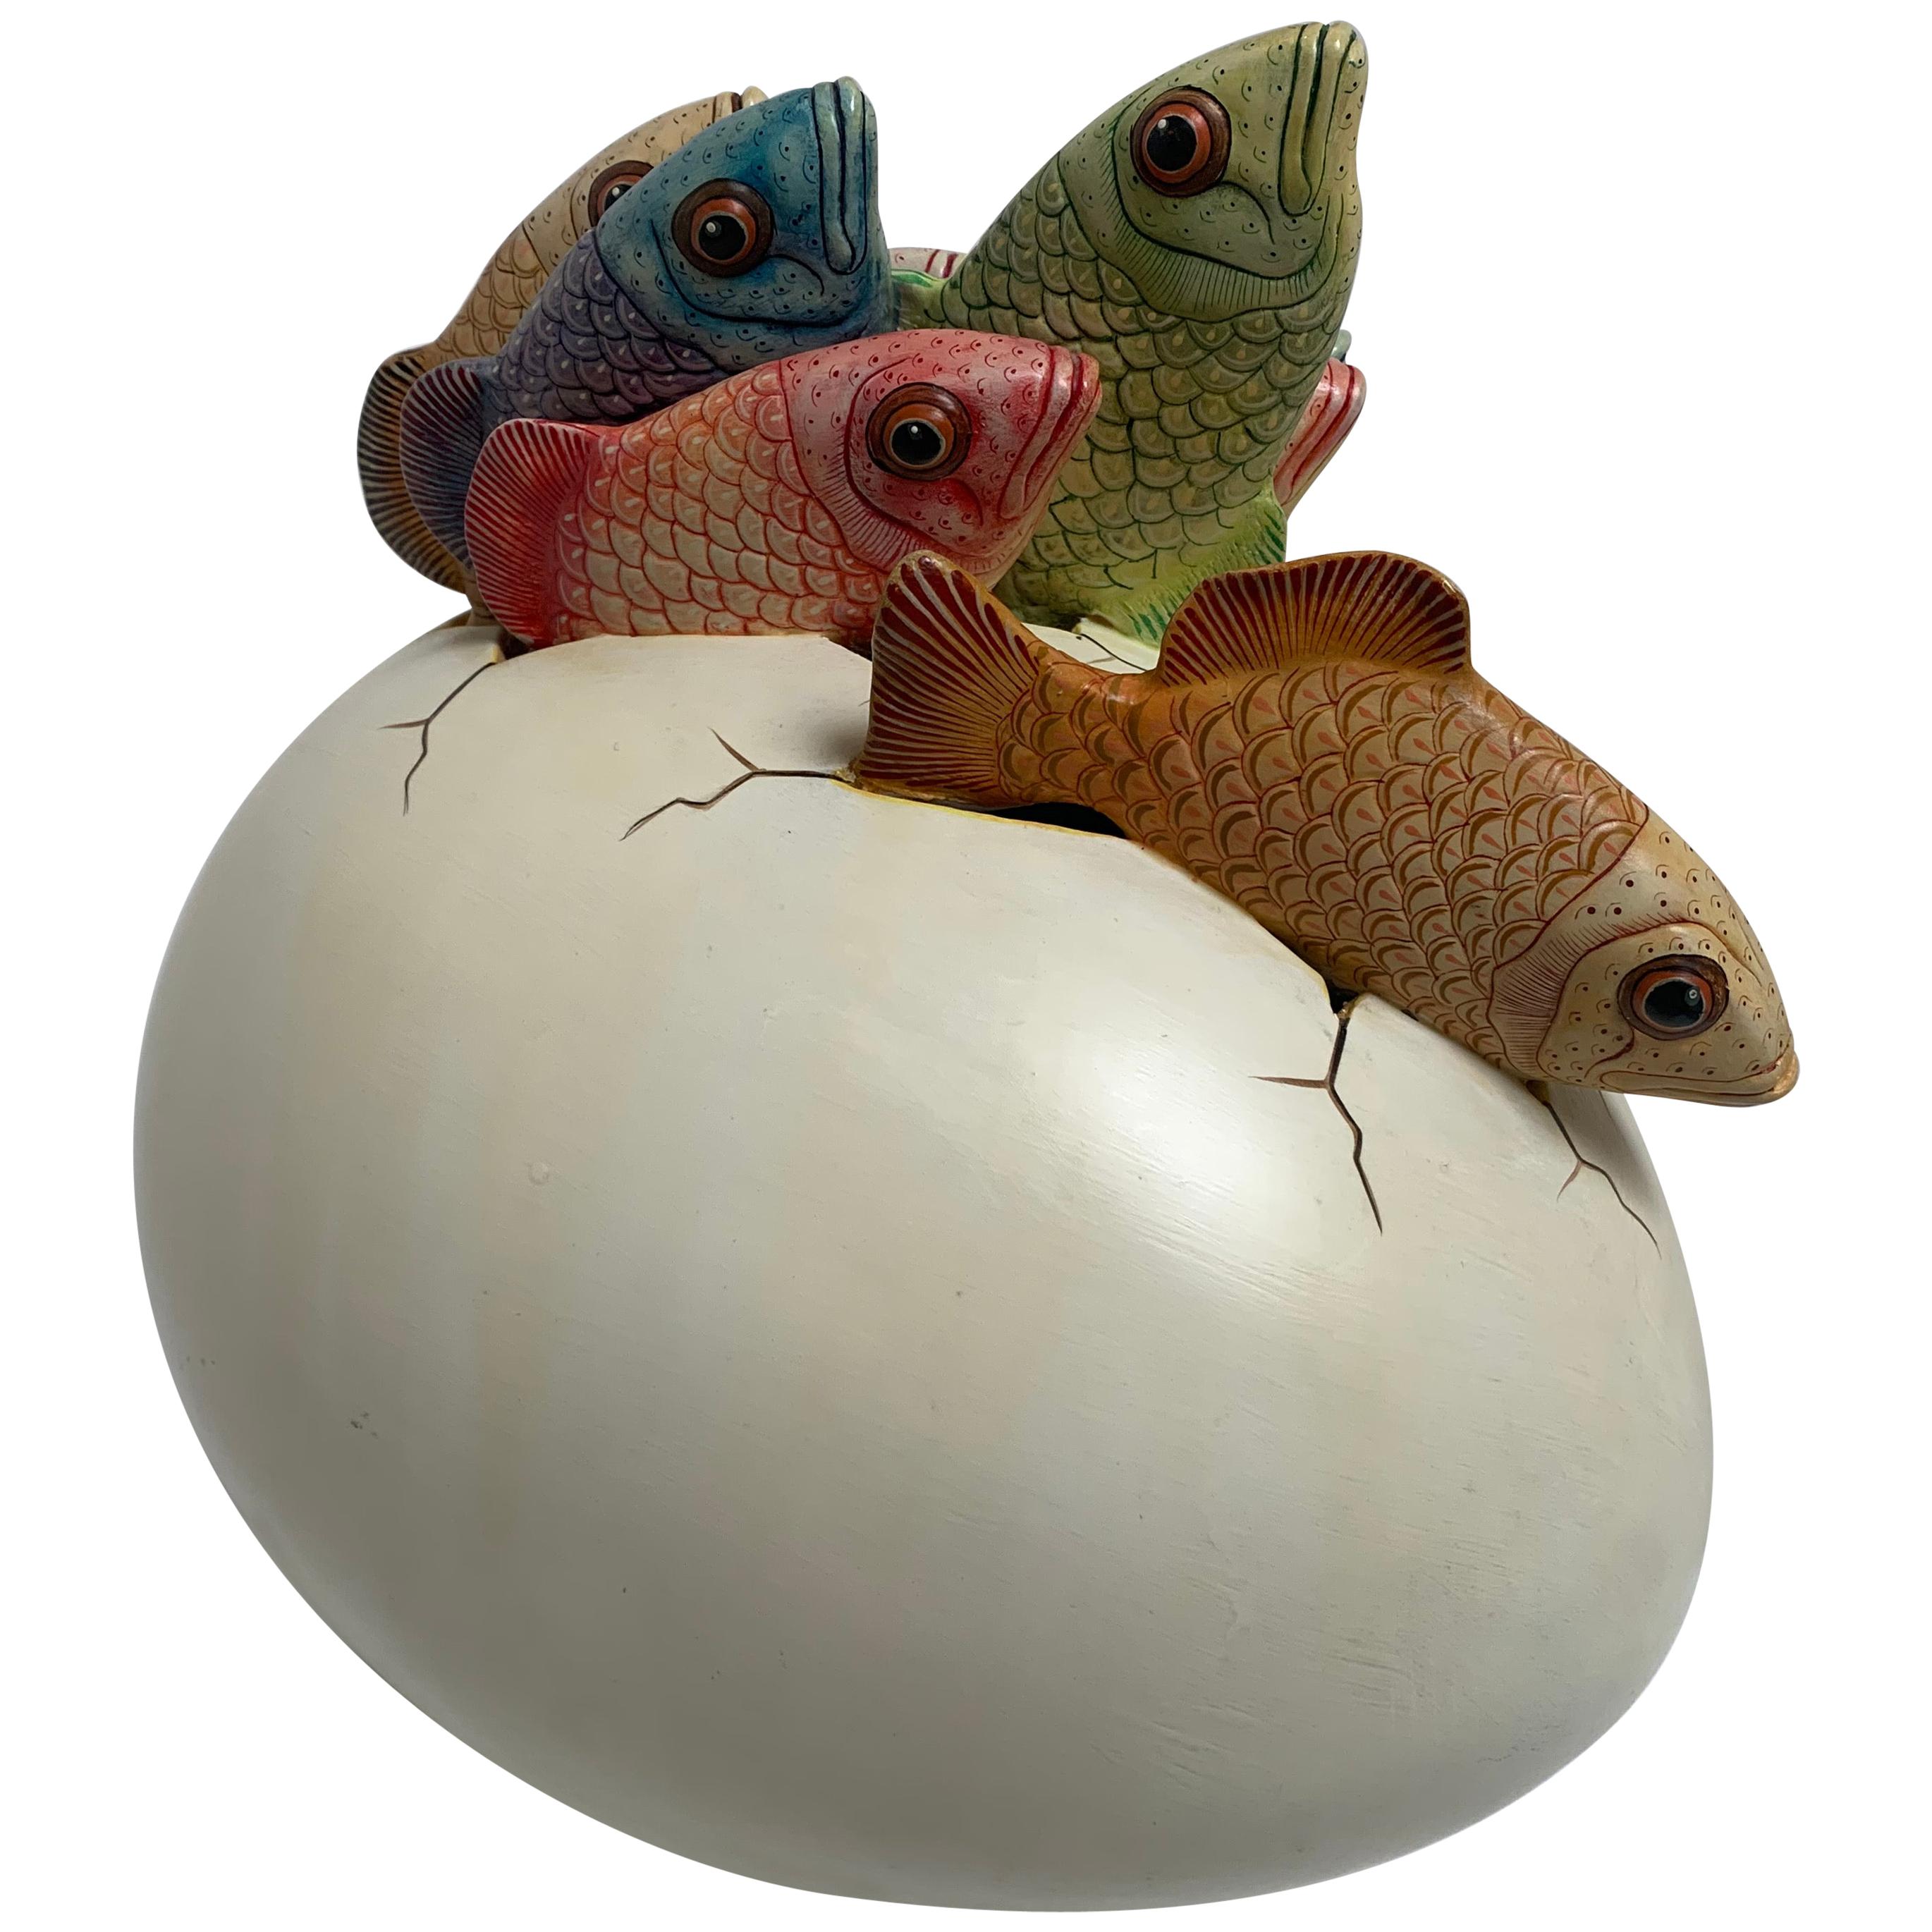 Ceramic Sculpture, Egg Art Hatching Fish Signed by Artist Sergio Bustamante